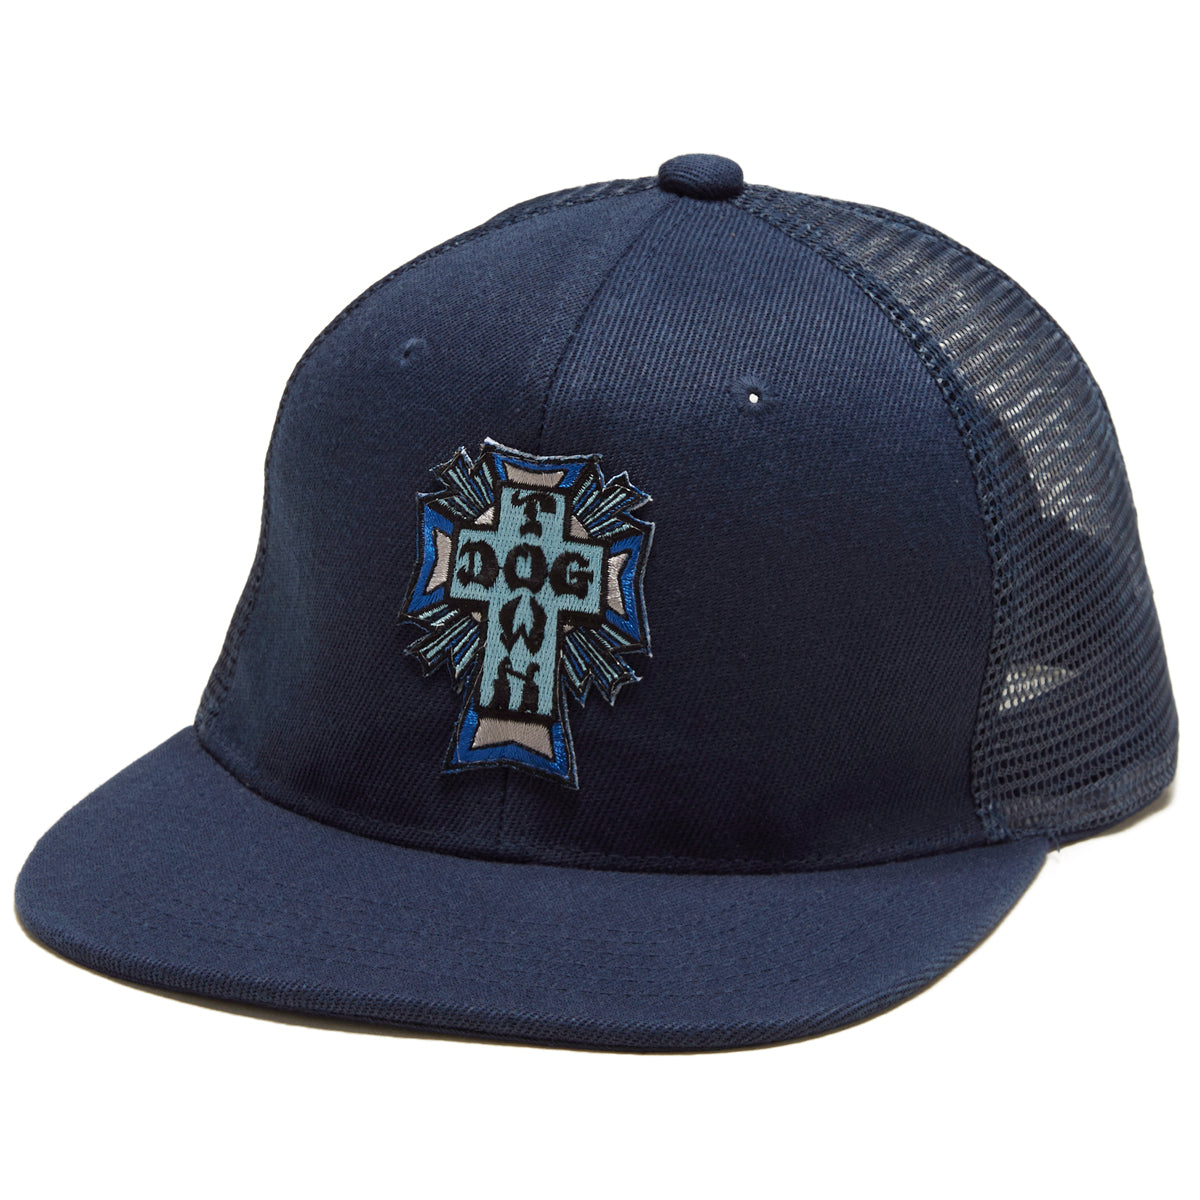 Dogtown Blue Cross Patch Mesh Hat - Navy Blue image 1